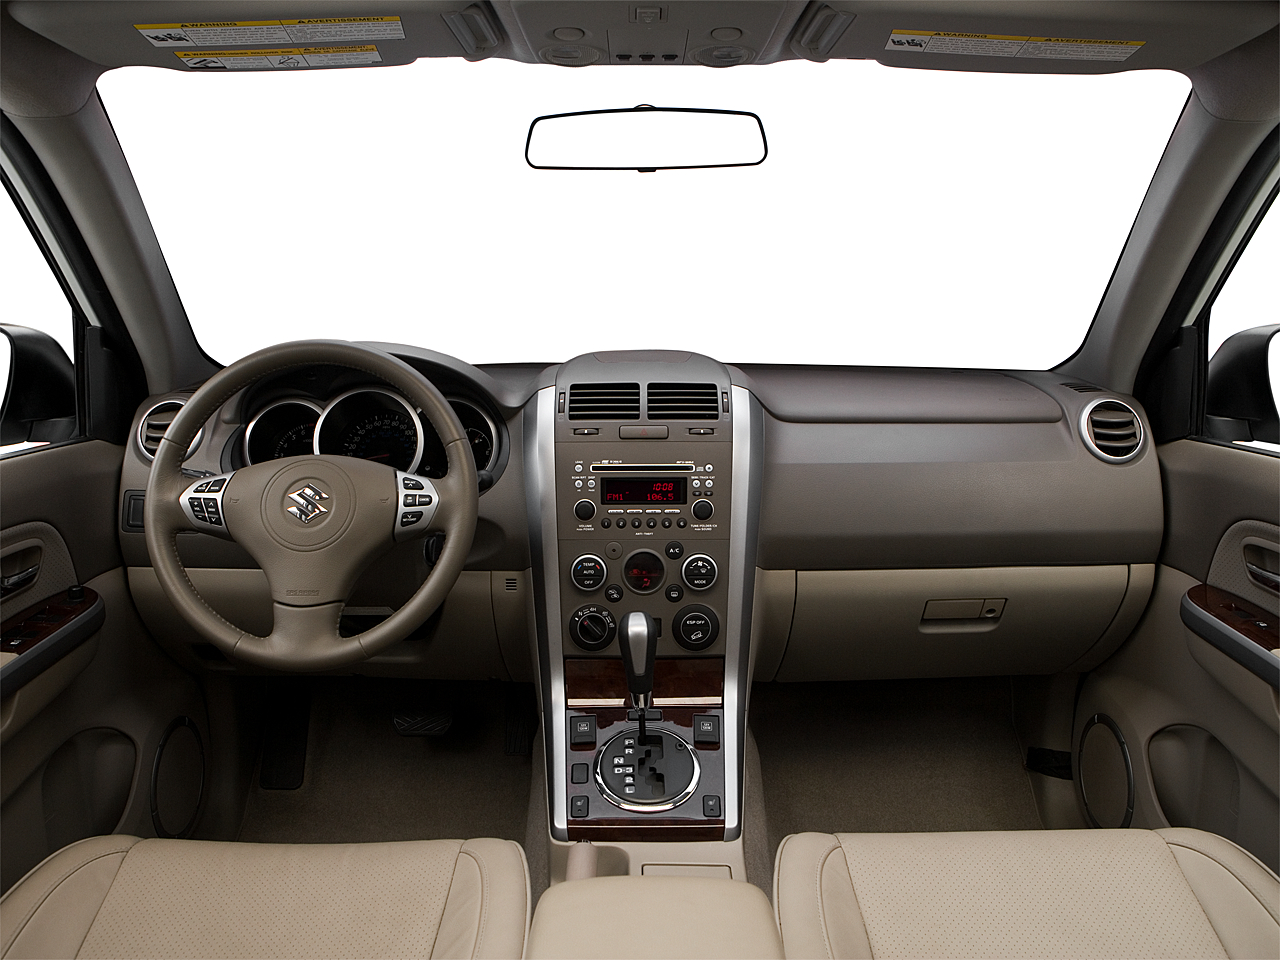 2009 Suzuki Grand Vitara Premium 4dr SUV 4A - Research - GrooveCar